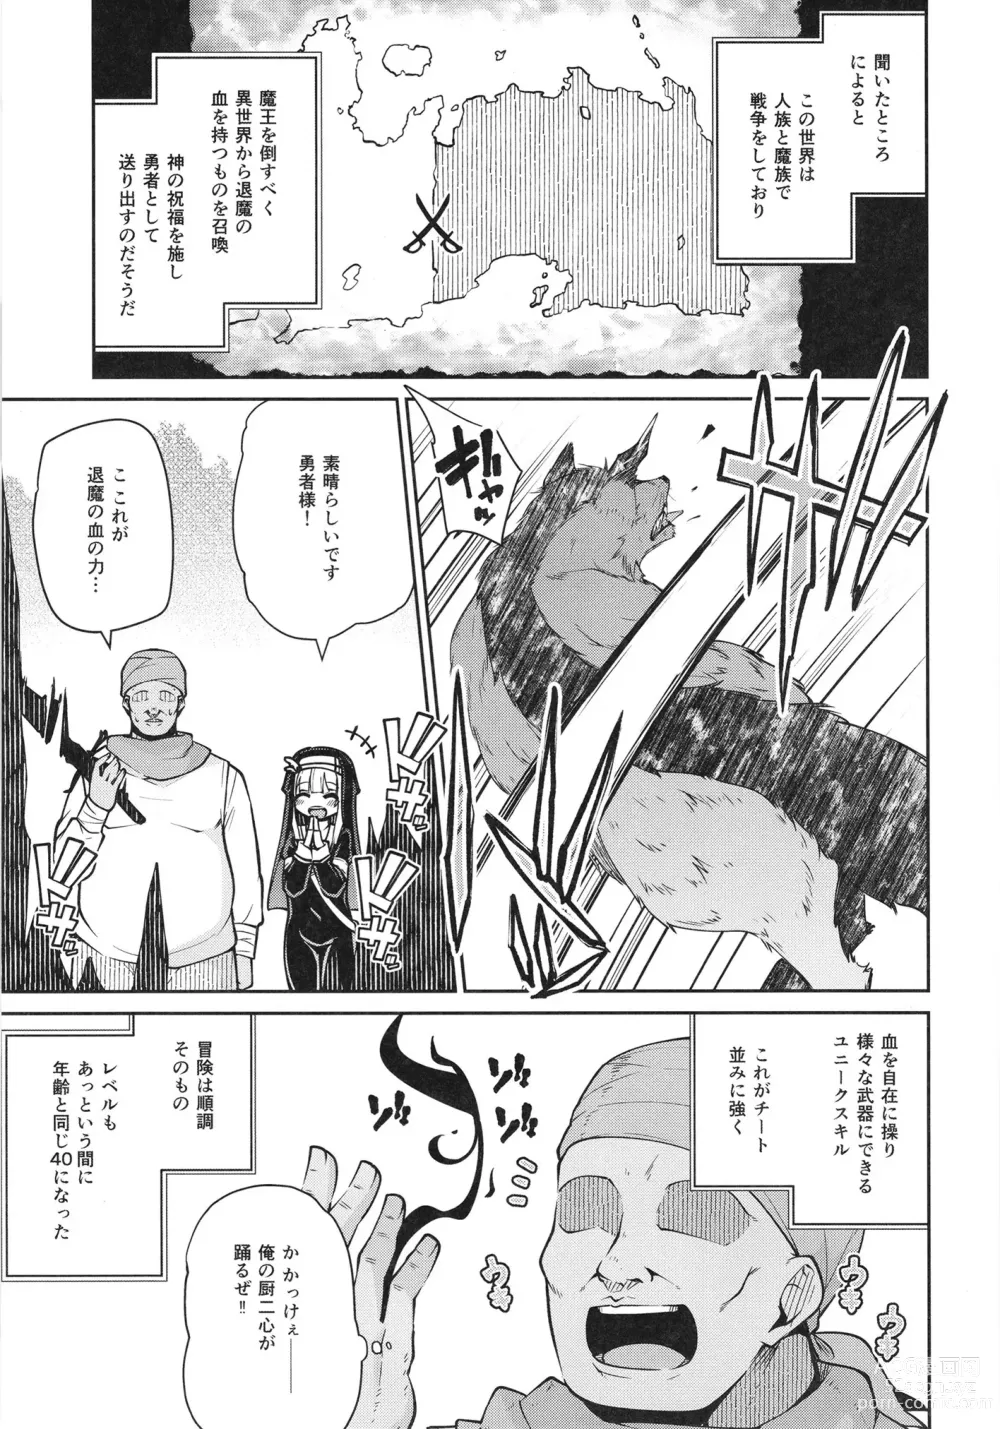 Page 9 of doujinshi Seijo to Slime to Zako Yuusha